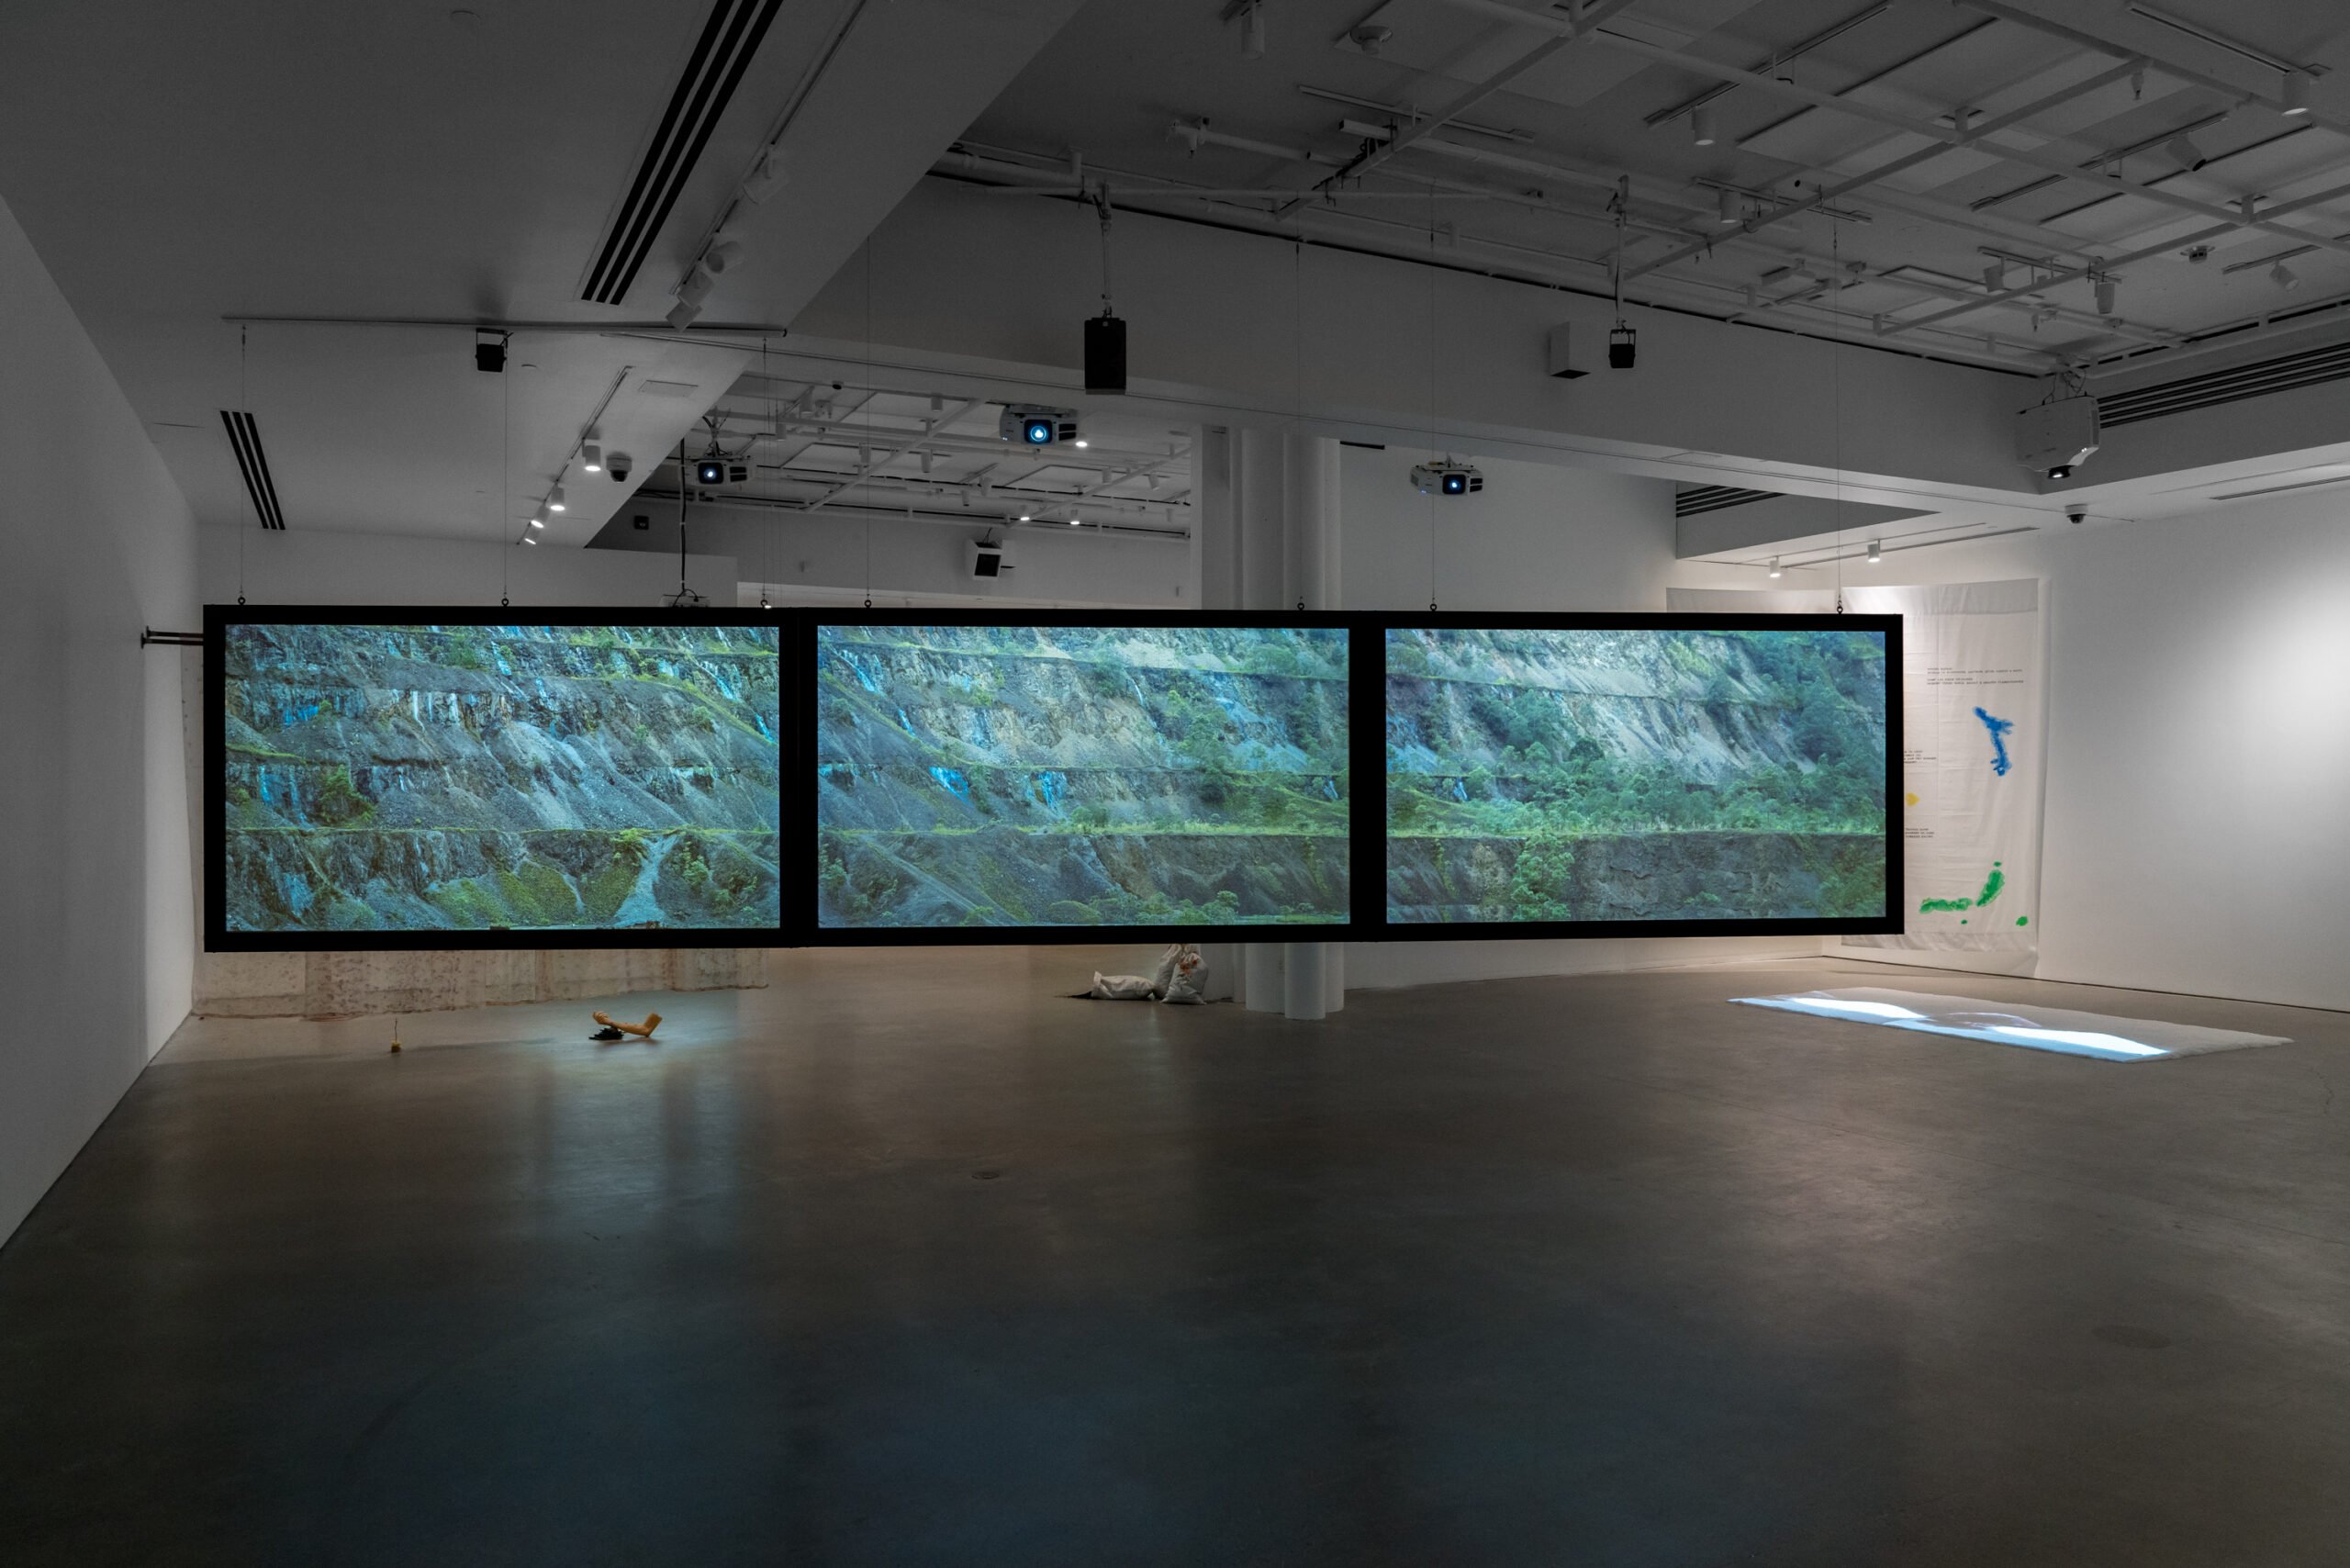 Taloi Havini, Habitat 2017, 2017, installation view at the Galerie de l’UQAM as part of MOMENTA 2021. Photo: Jean-Michael Seminaro